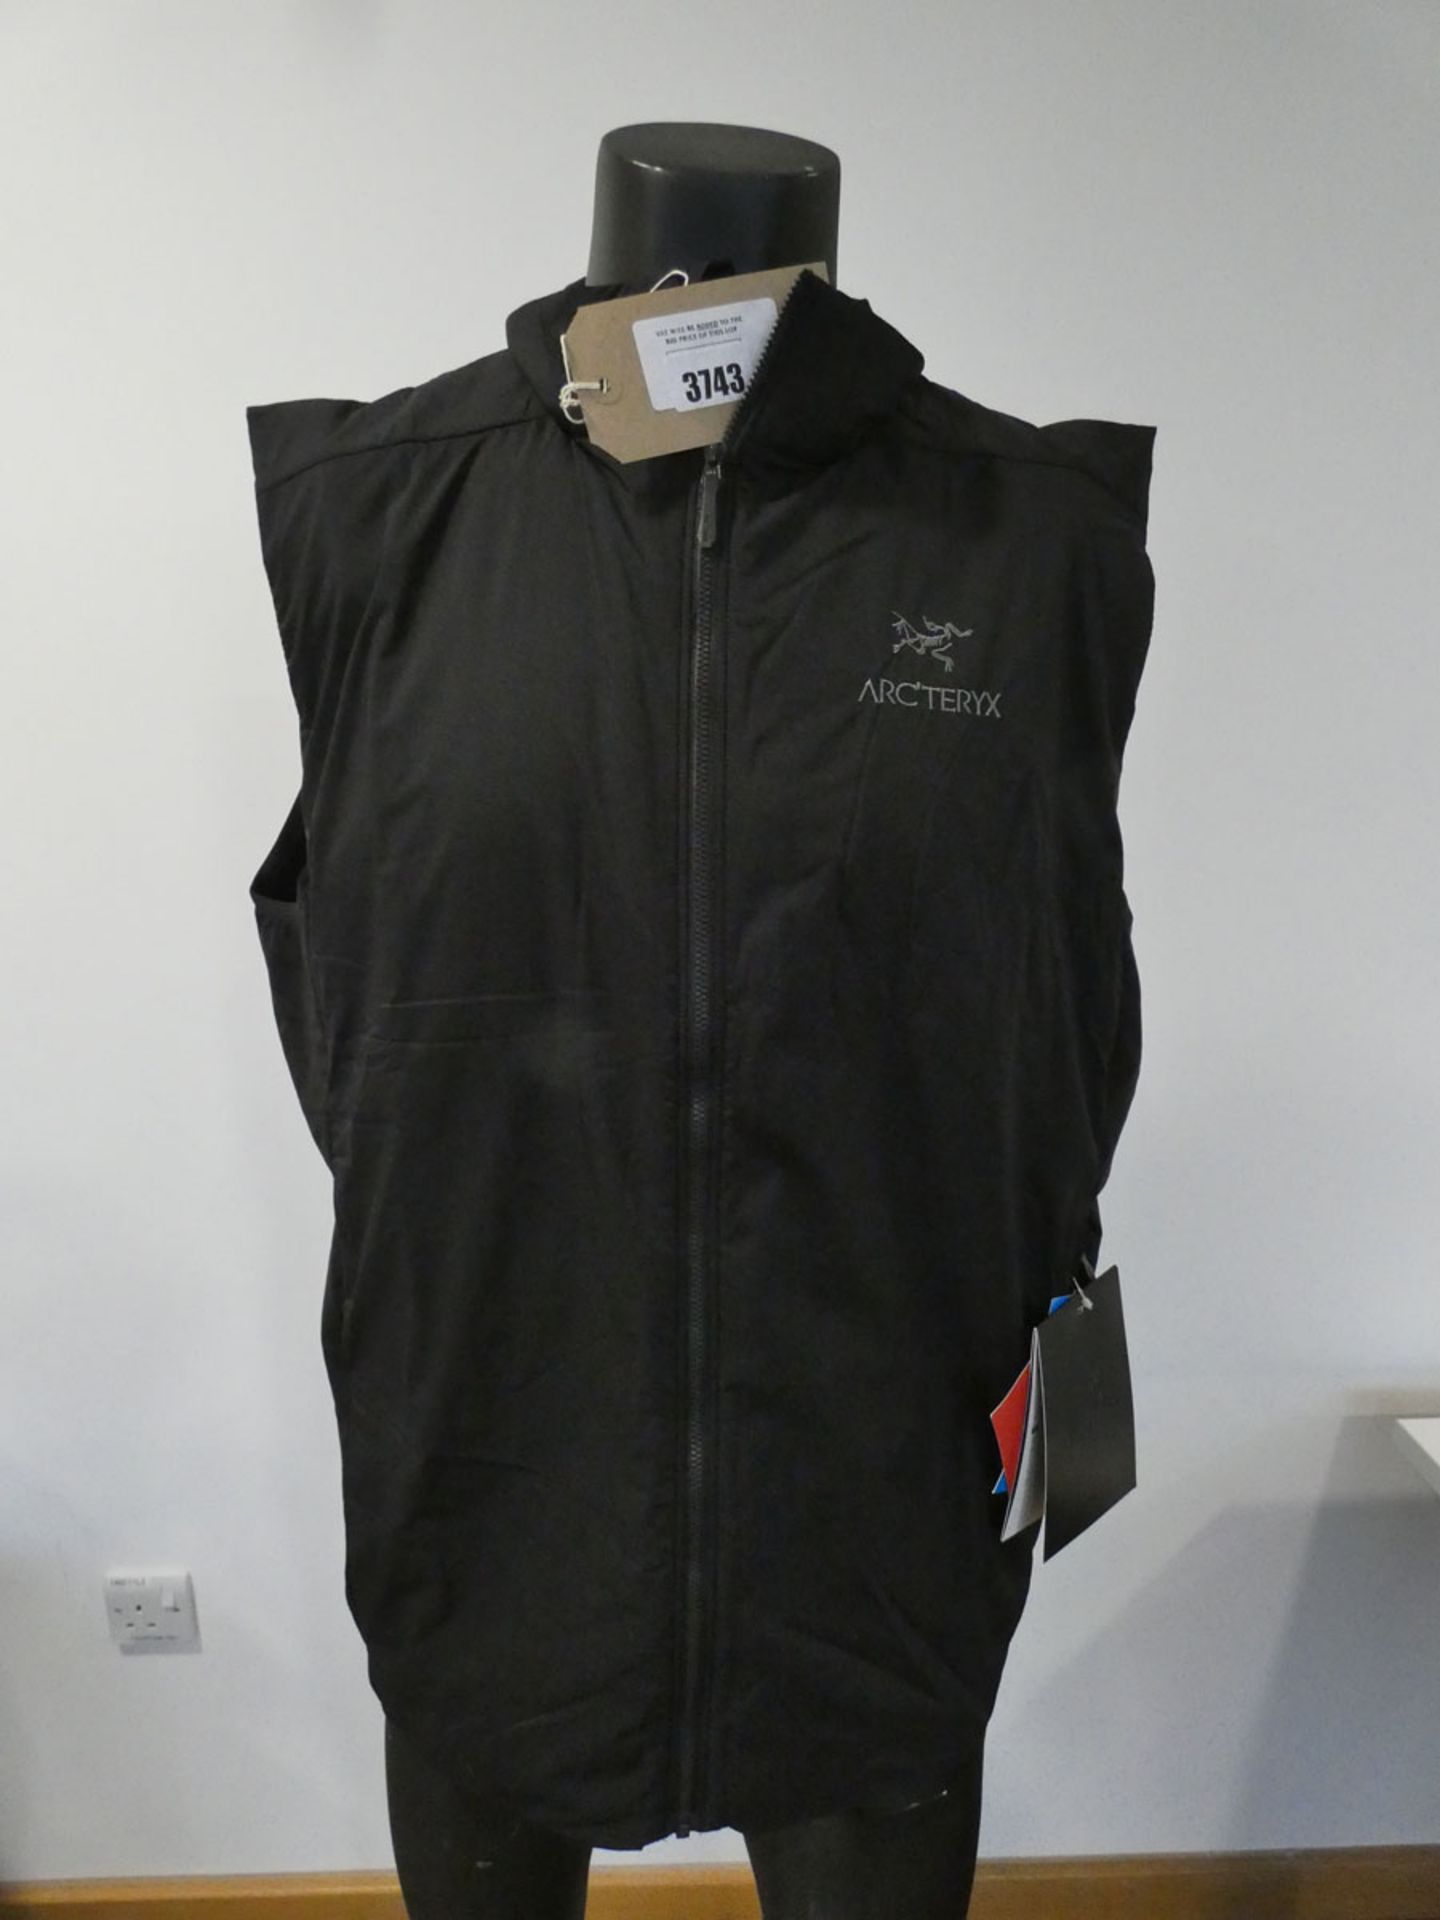 Arc'teryx men's atom LT vest jacket in black size XL (Mannequin not included)